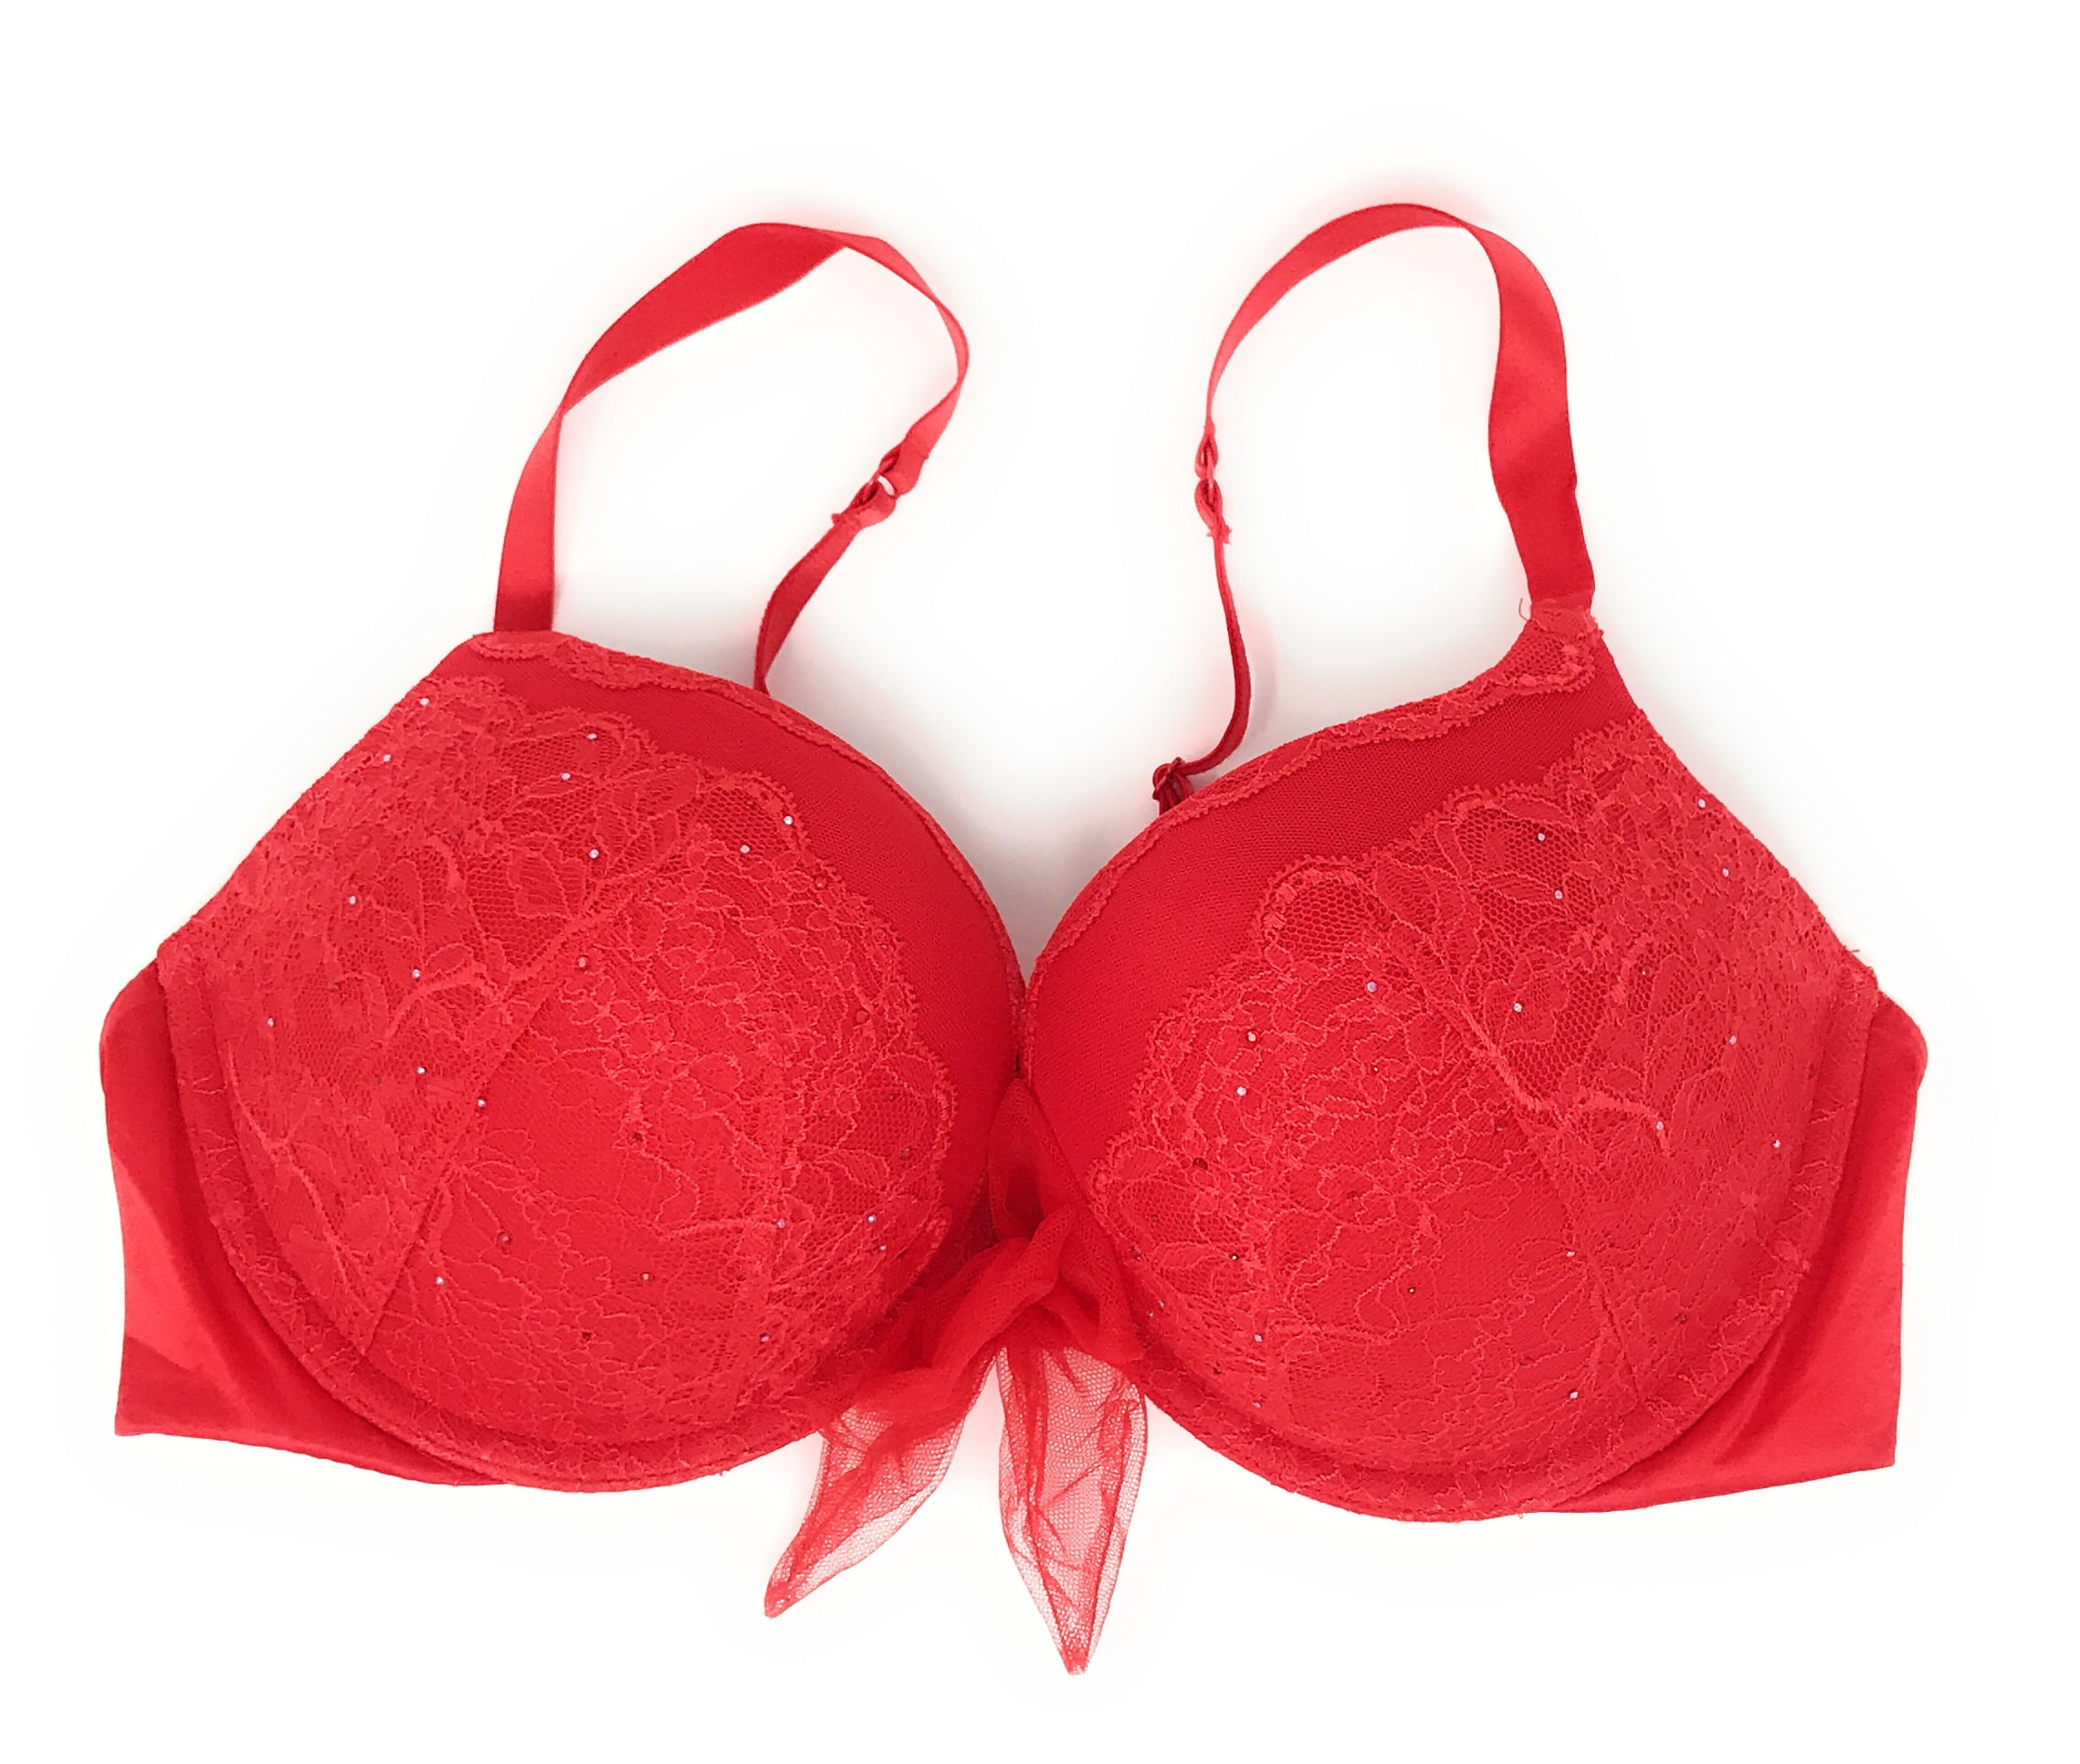 Victoria's Secret Date Night Lift Push-up Bra Size 34D Racy Red Super Sexy